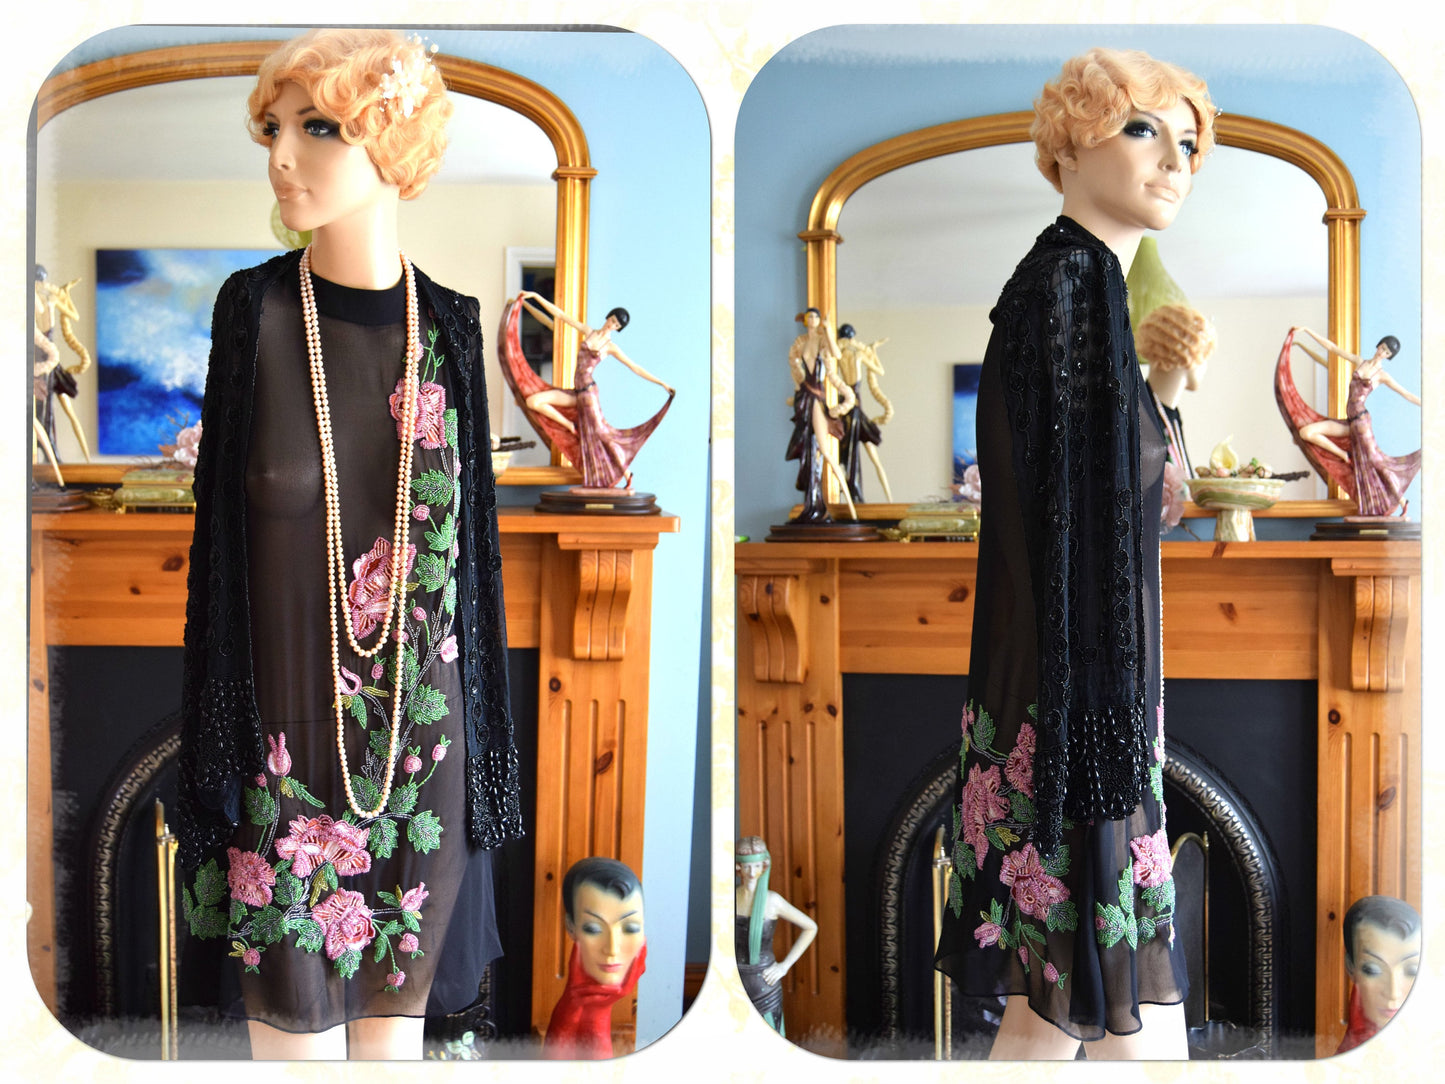 Vintage Mesh Embroidered beaded 1920s style Black Sheer Floral Dress size Uk 12 US 8